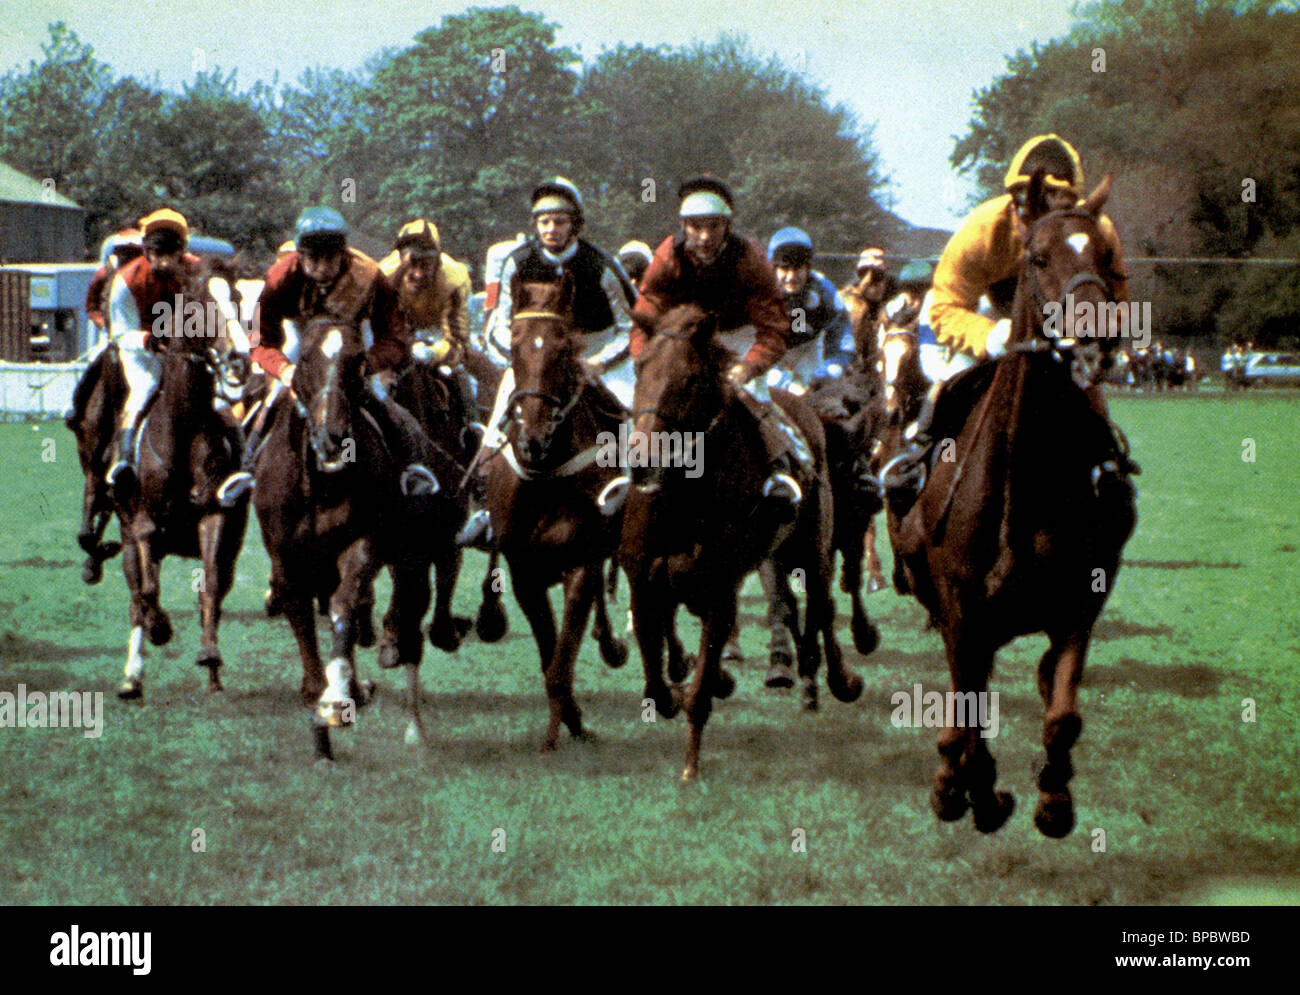 HORSE RACING SCENE CHAMPIONS (1984 Stock Photo - Alamy